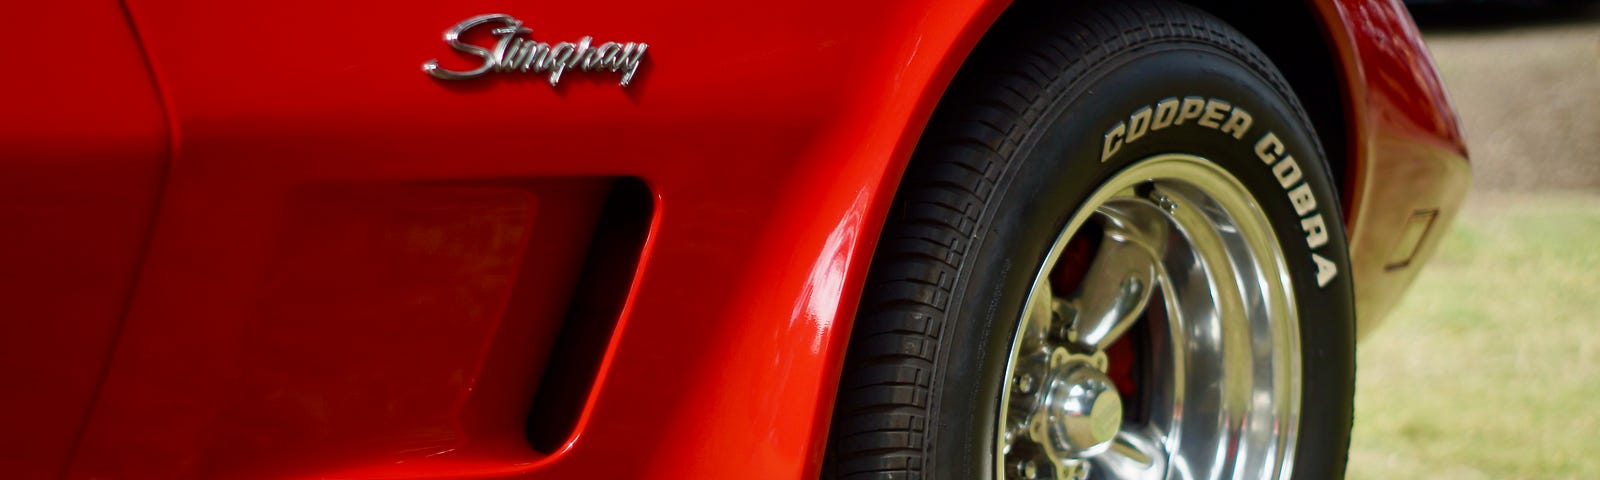 Front passenger side of a red corvette Stingray.